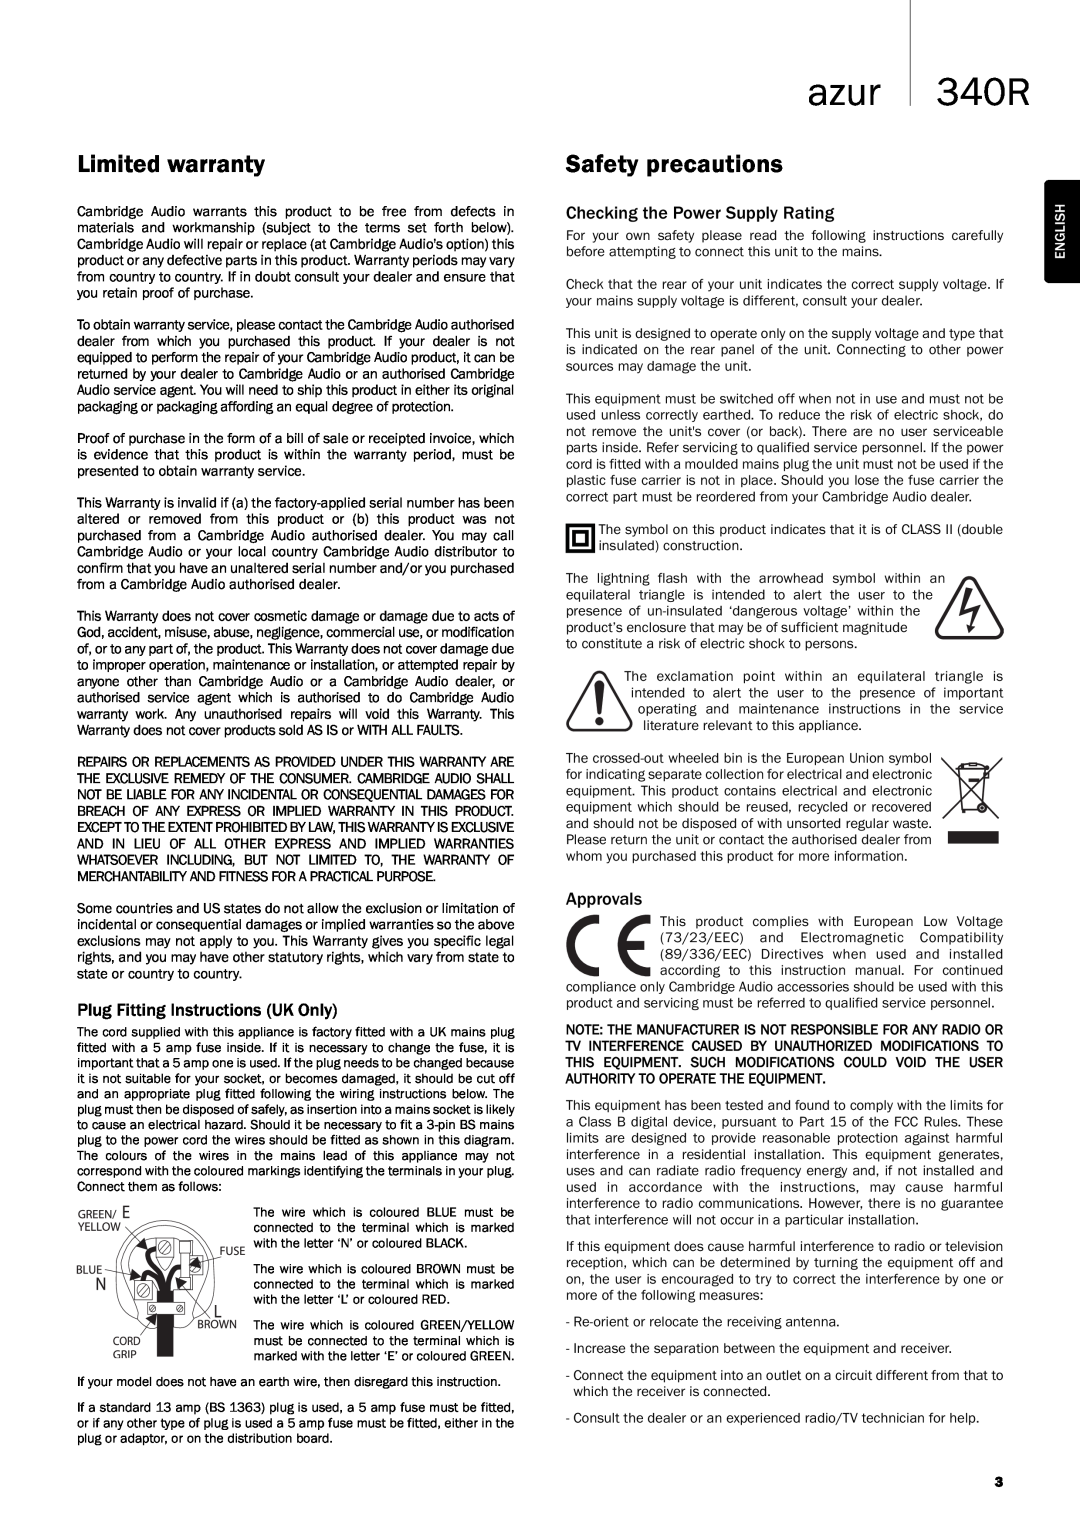 Cambridge Audio 340Razur user manual Limited warranty, Safety precautions, English 